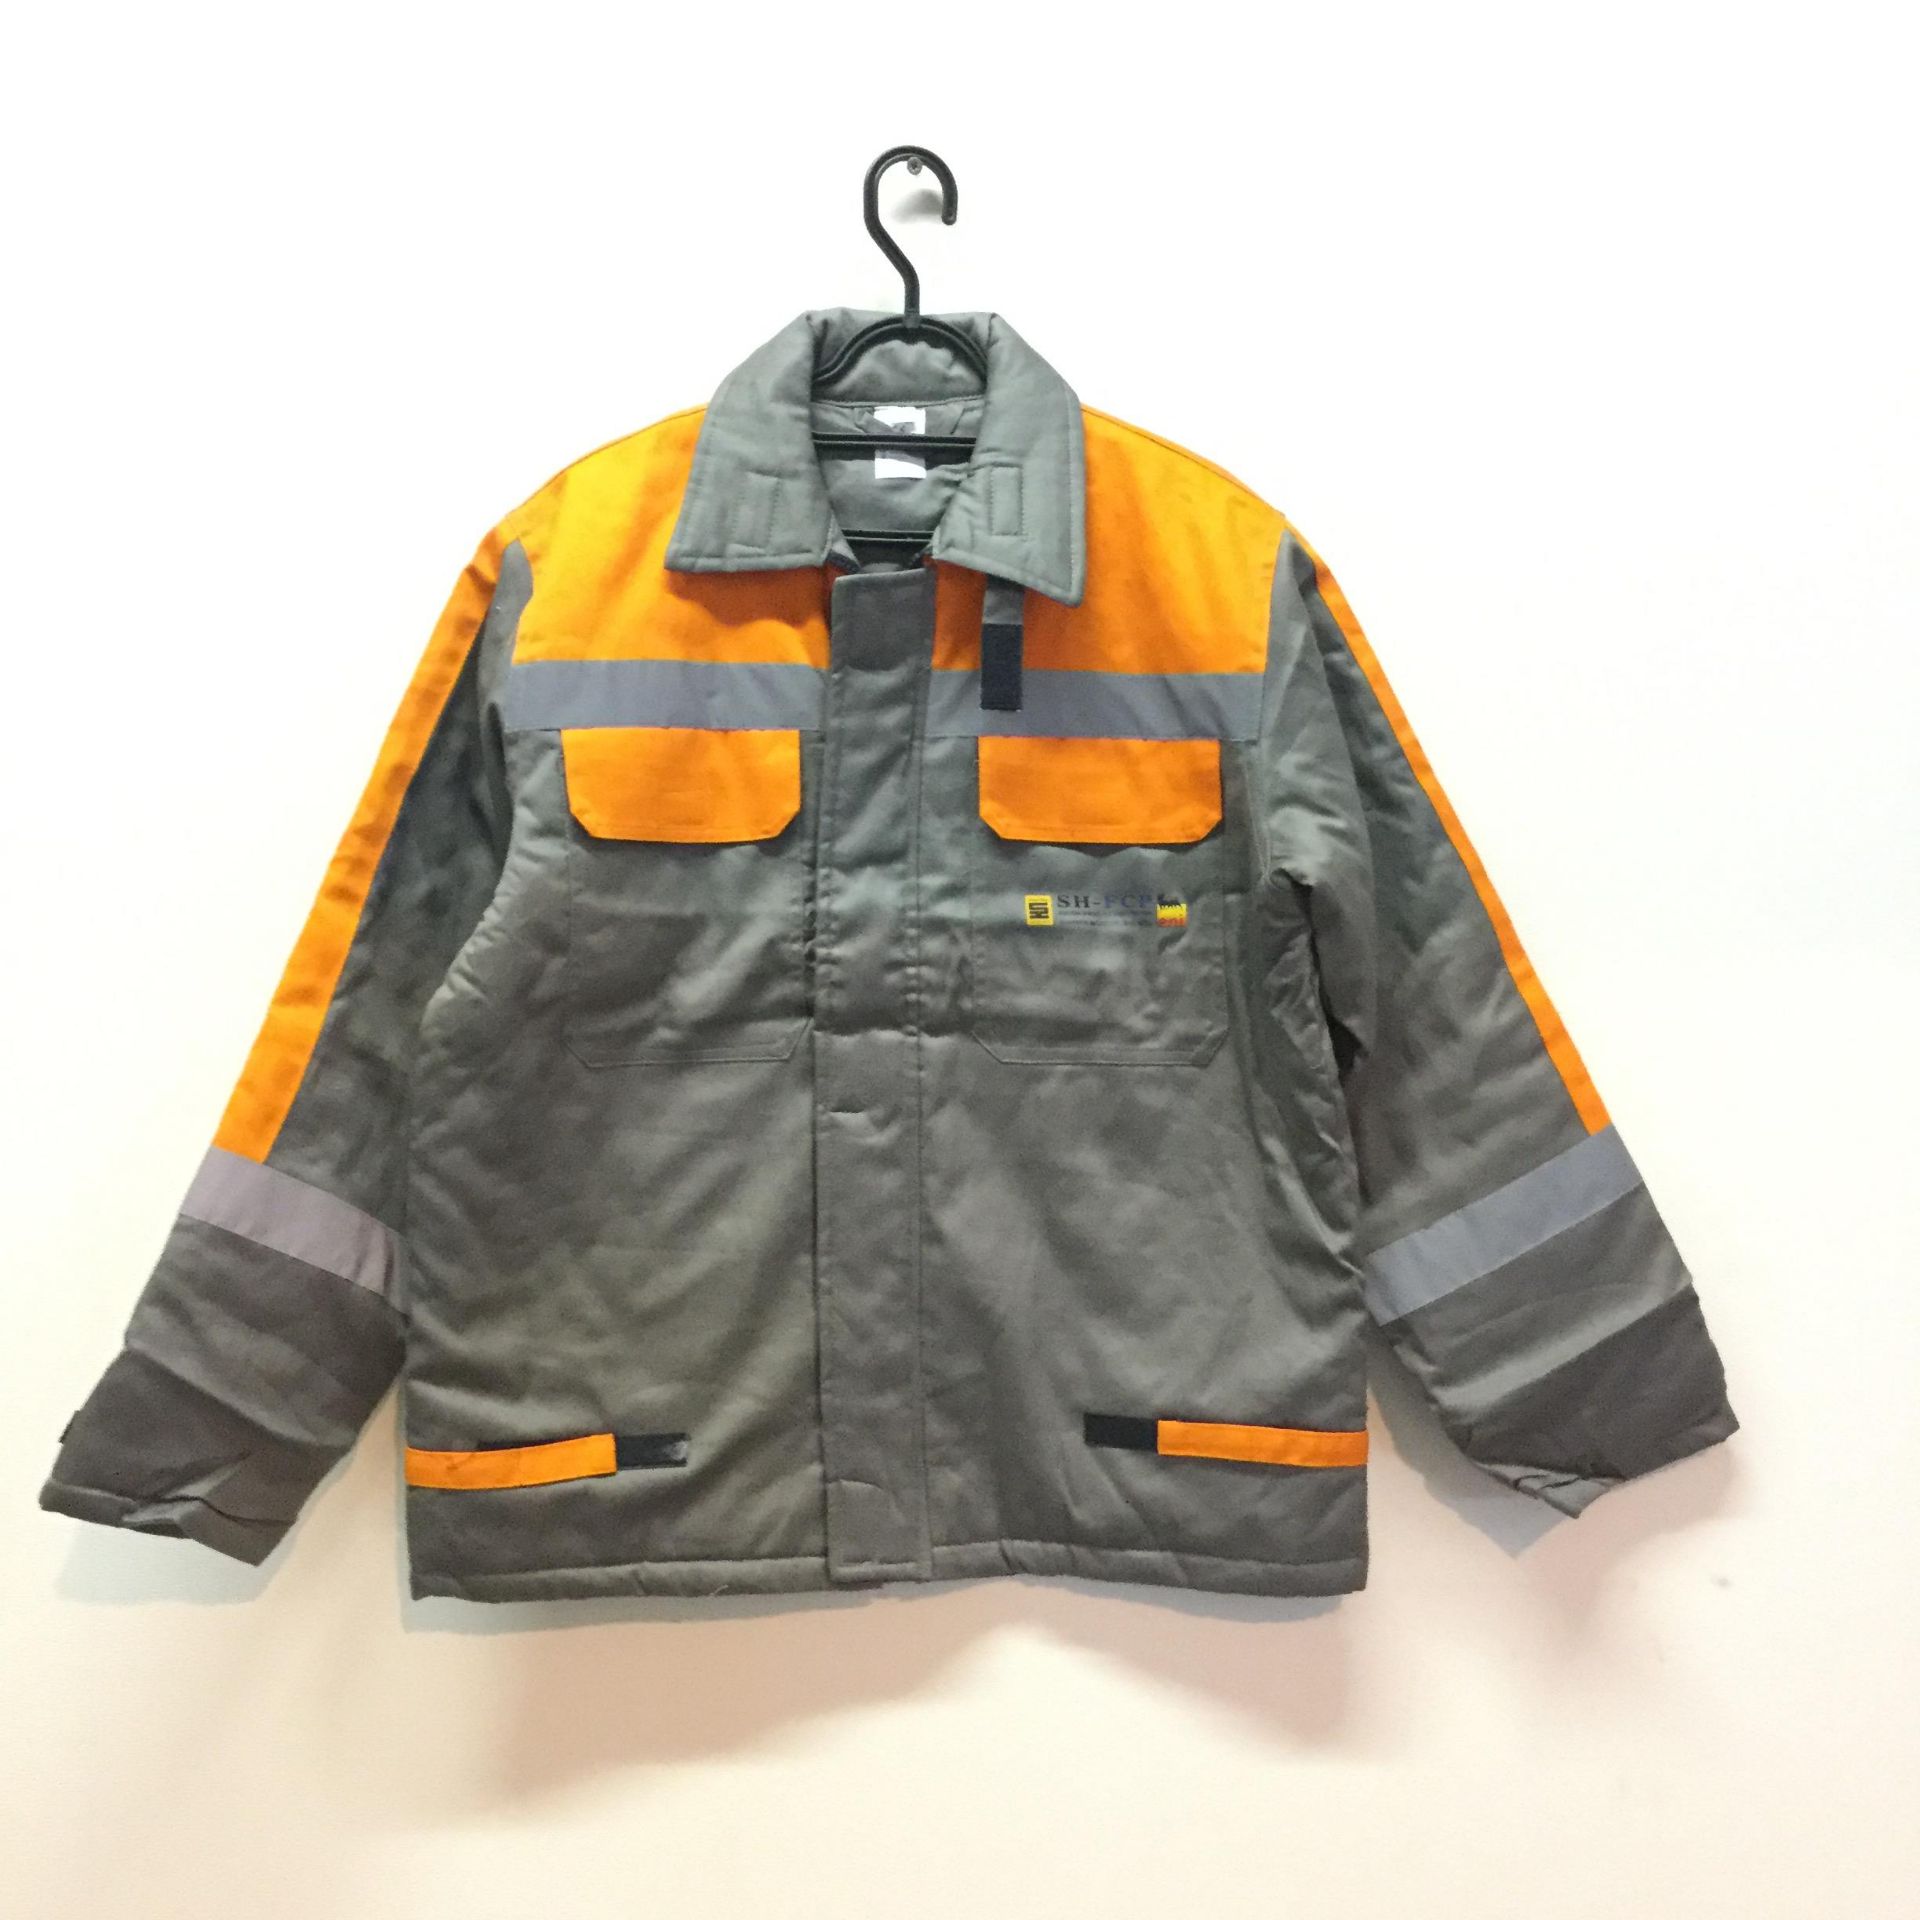 Flame Retardant Winter Jacket - Size 50